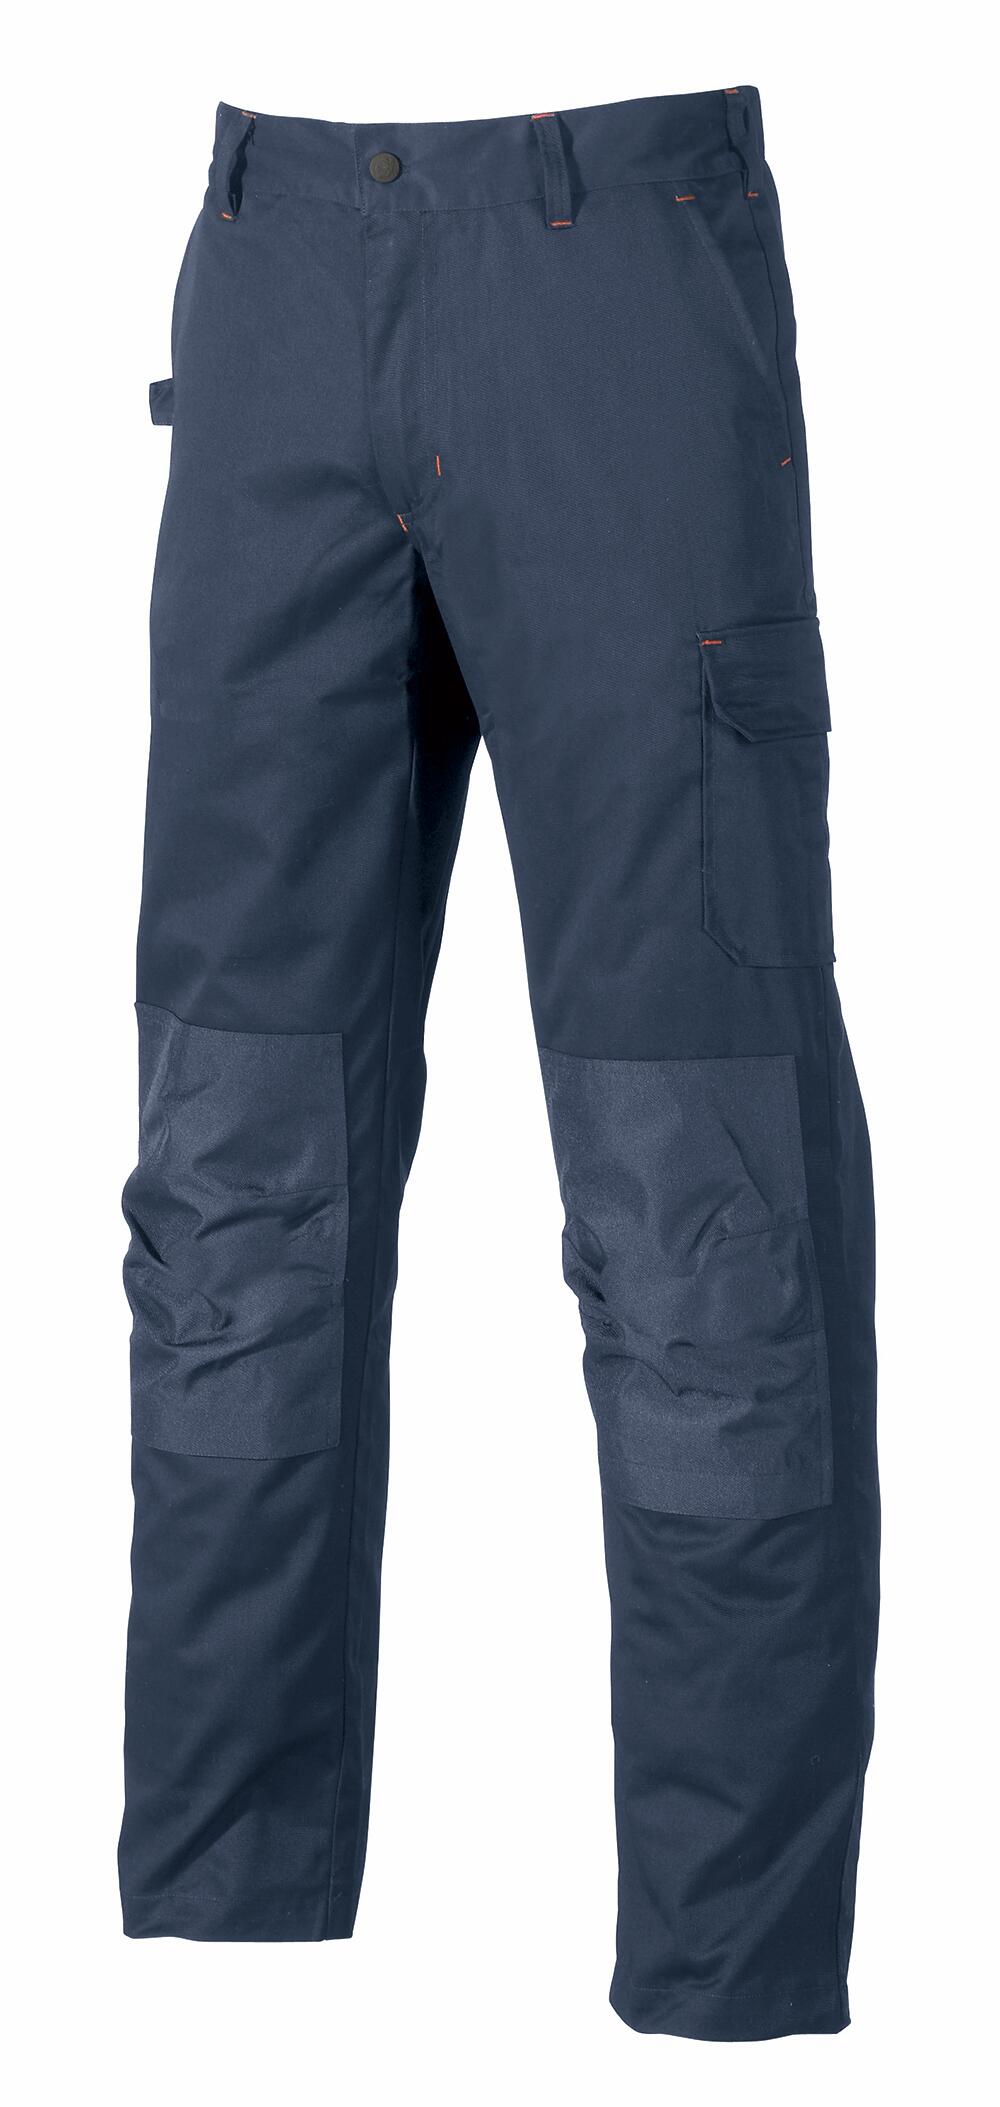 Pantalón de trabajo u-power azul marino t50